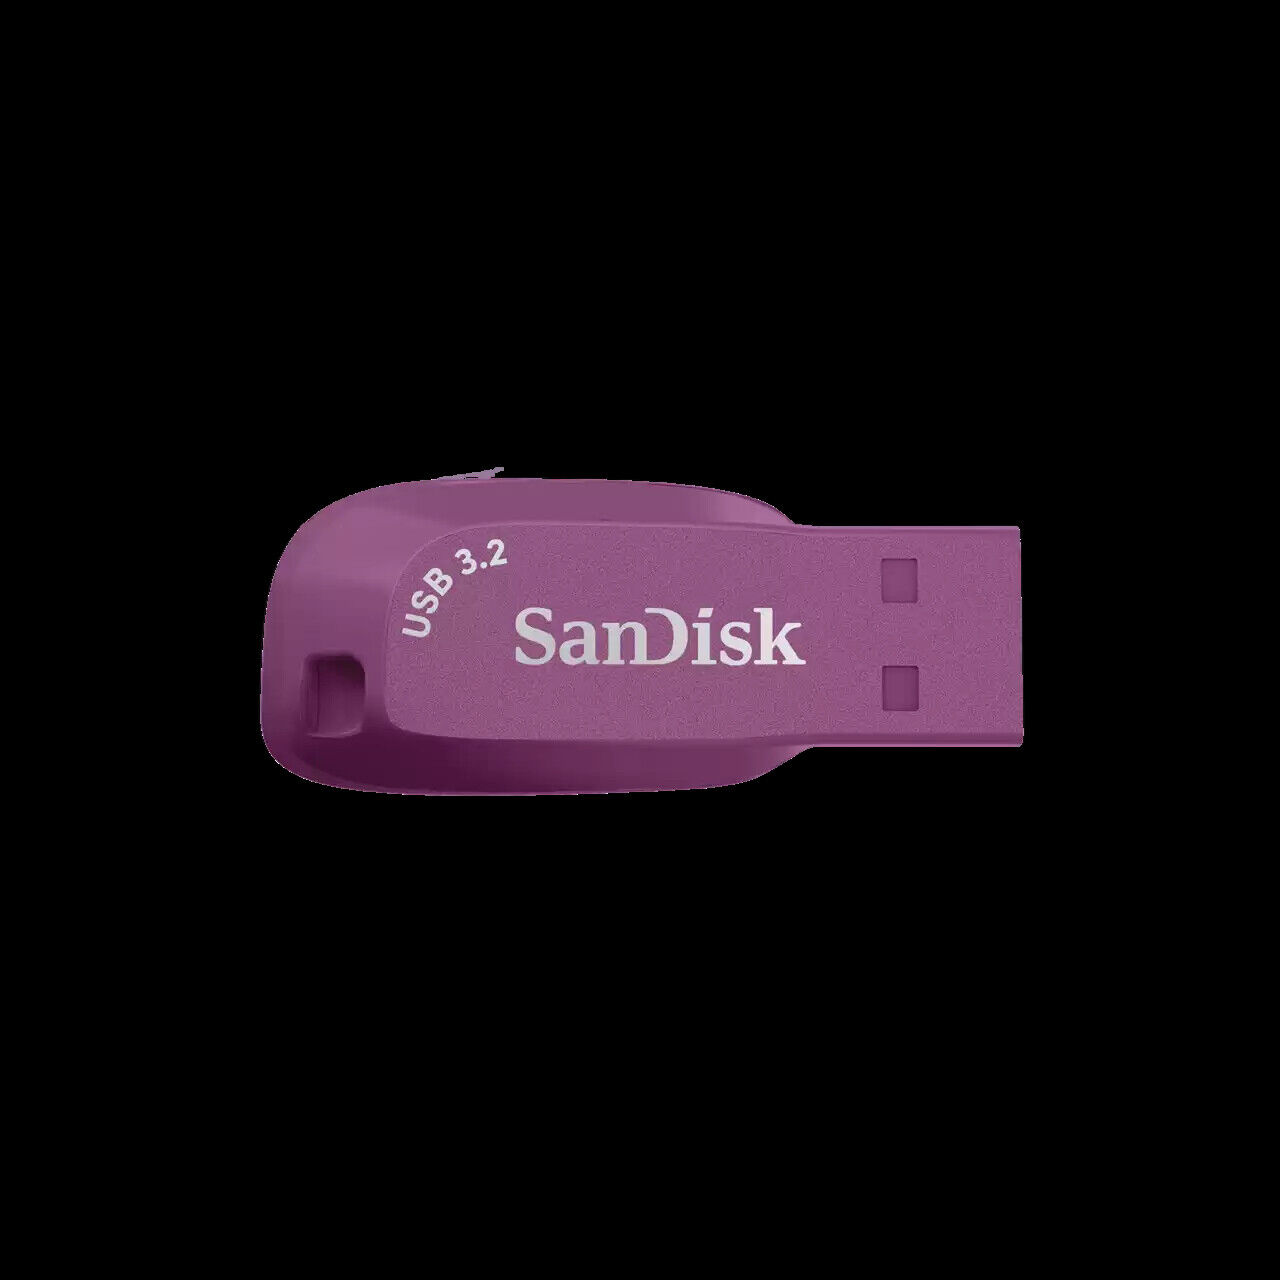 SanDisk 512GB Ultra Shift USB 3.2 Gen 1 Flash Drive, Purple - SDCZ410-512G-G46CO